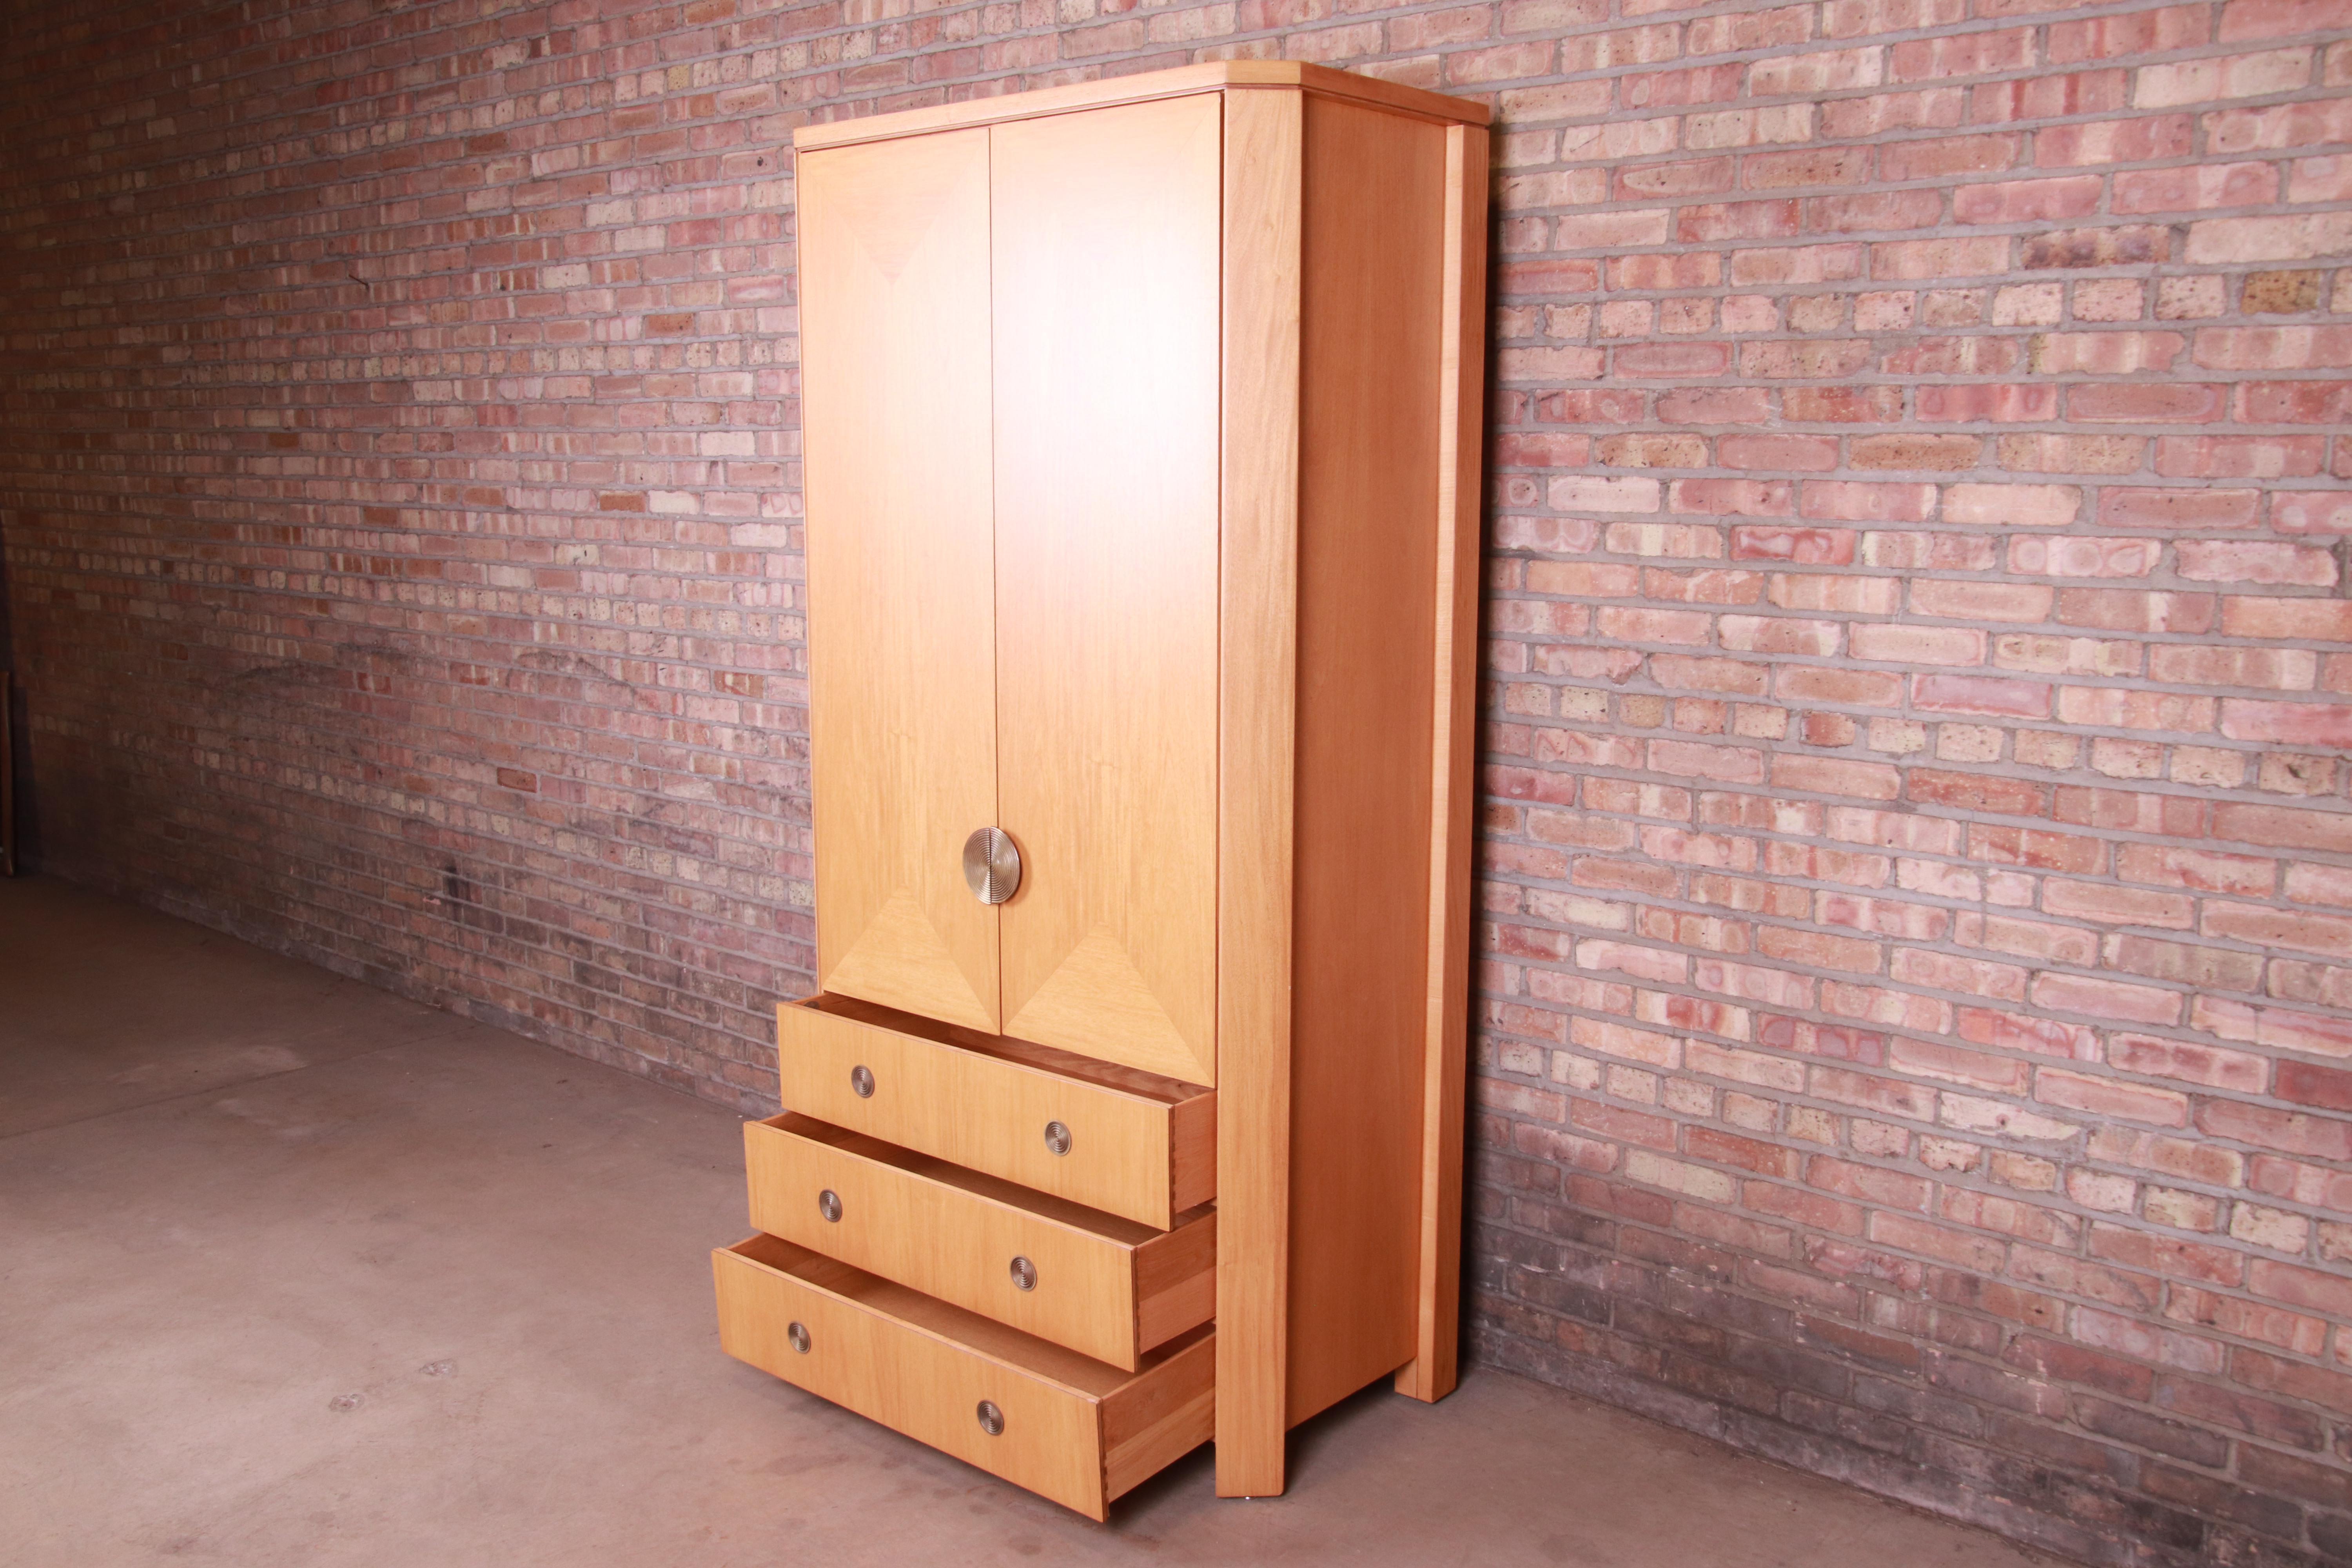 Fin du 20e siècle Charles Pfister for Baker Furniture - Commode Art Déco Primavera - Moderne en vente